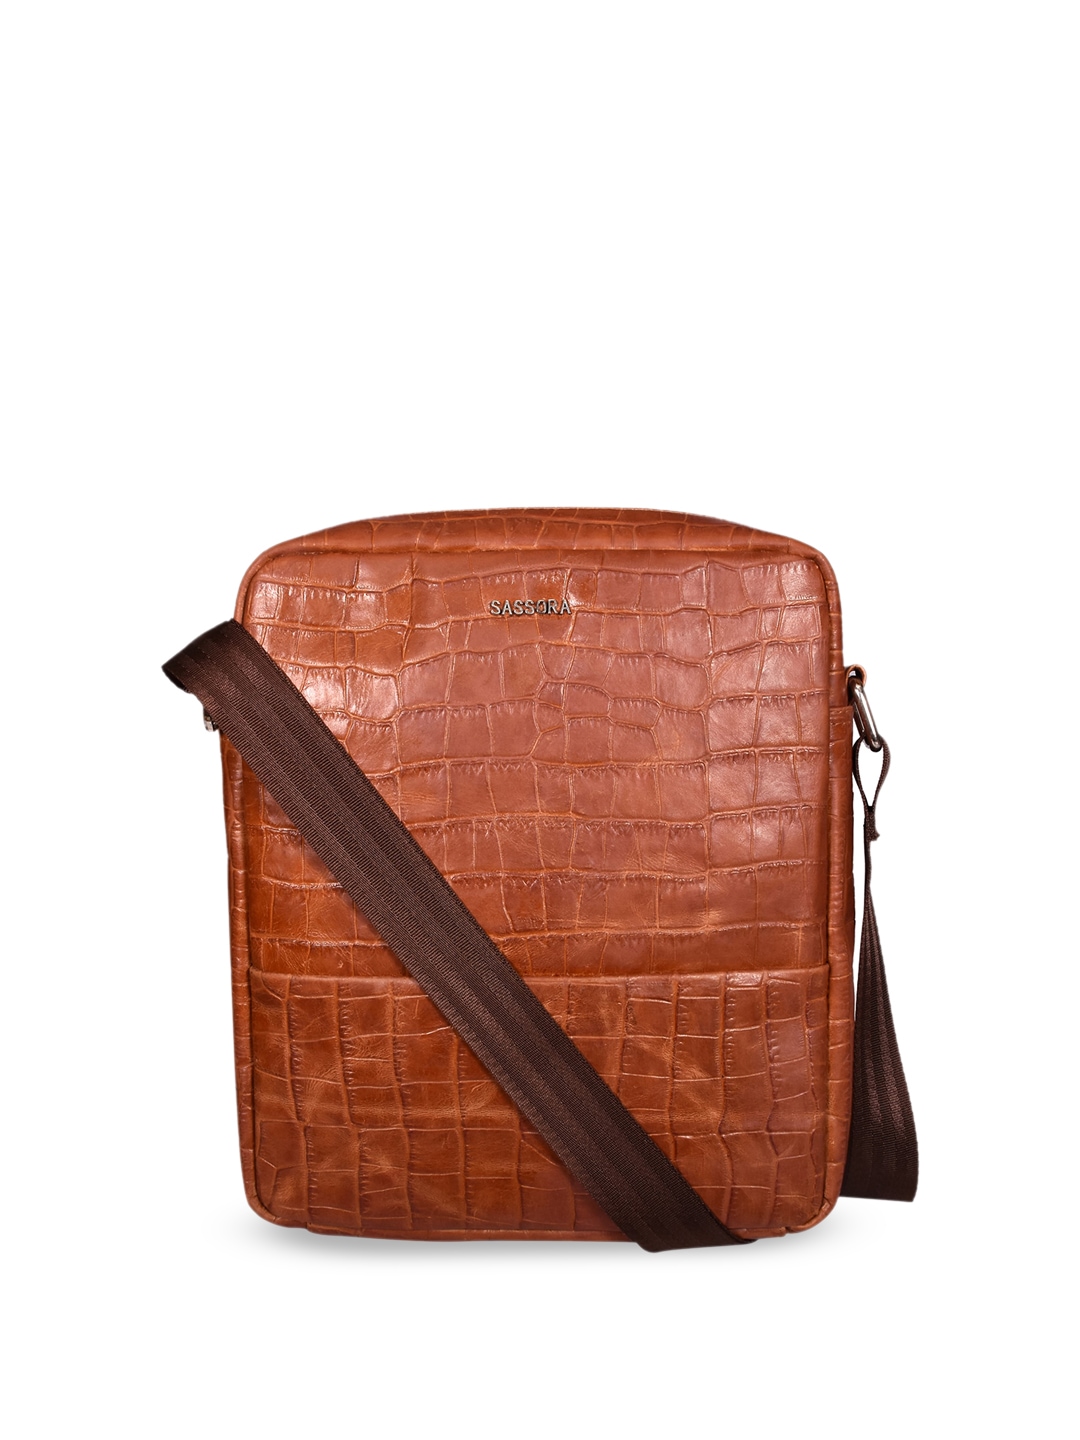 

Sassora Textured Leather Structured Handheld Bag, Tan